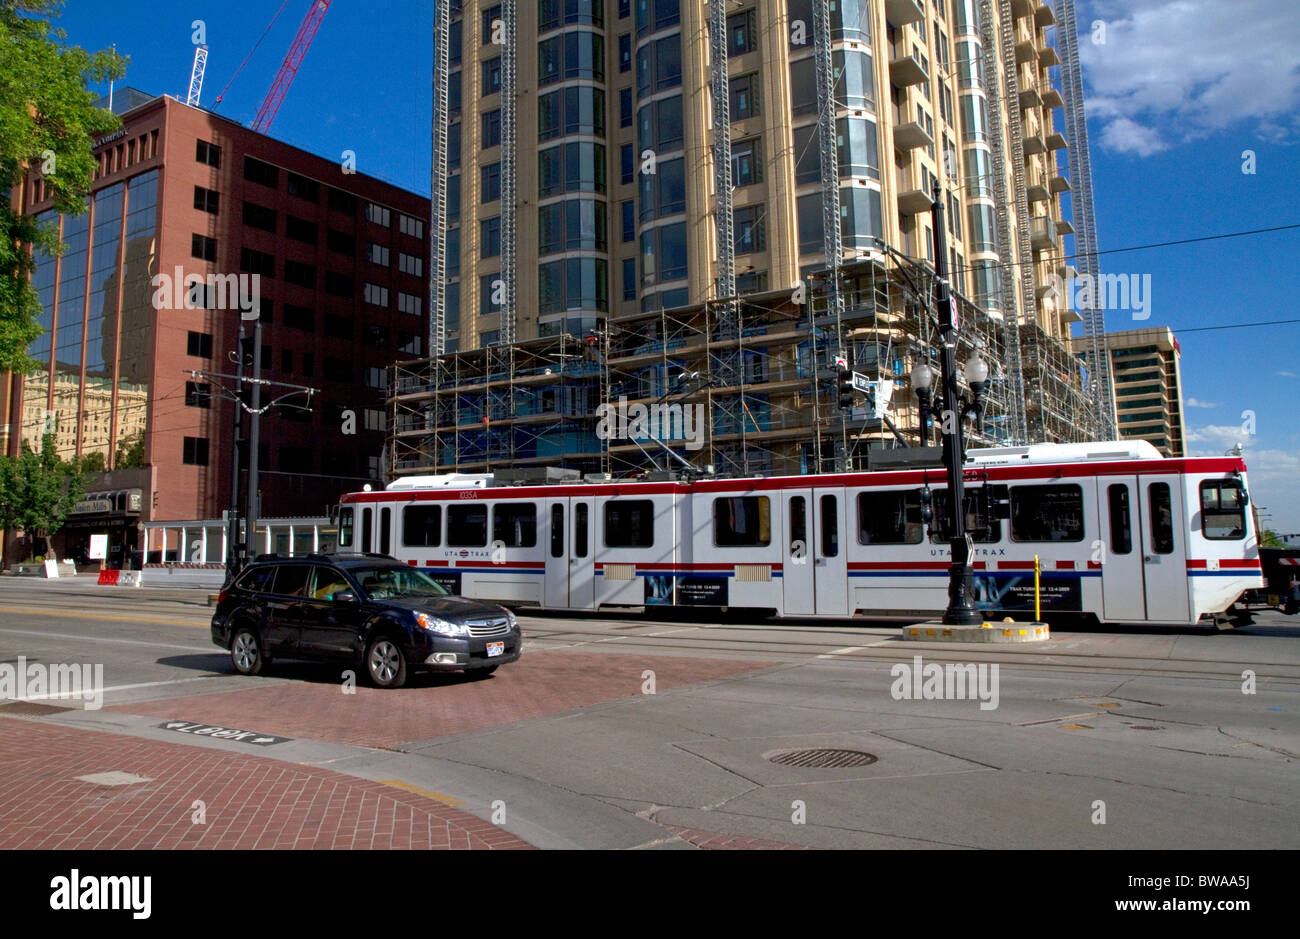 The TRAX light rail system in Salt Lake City, Utah, USA. Stock Photo